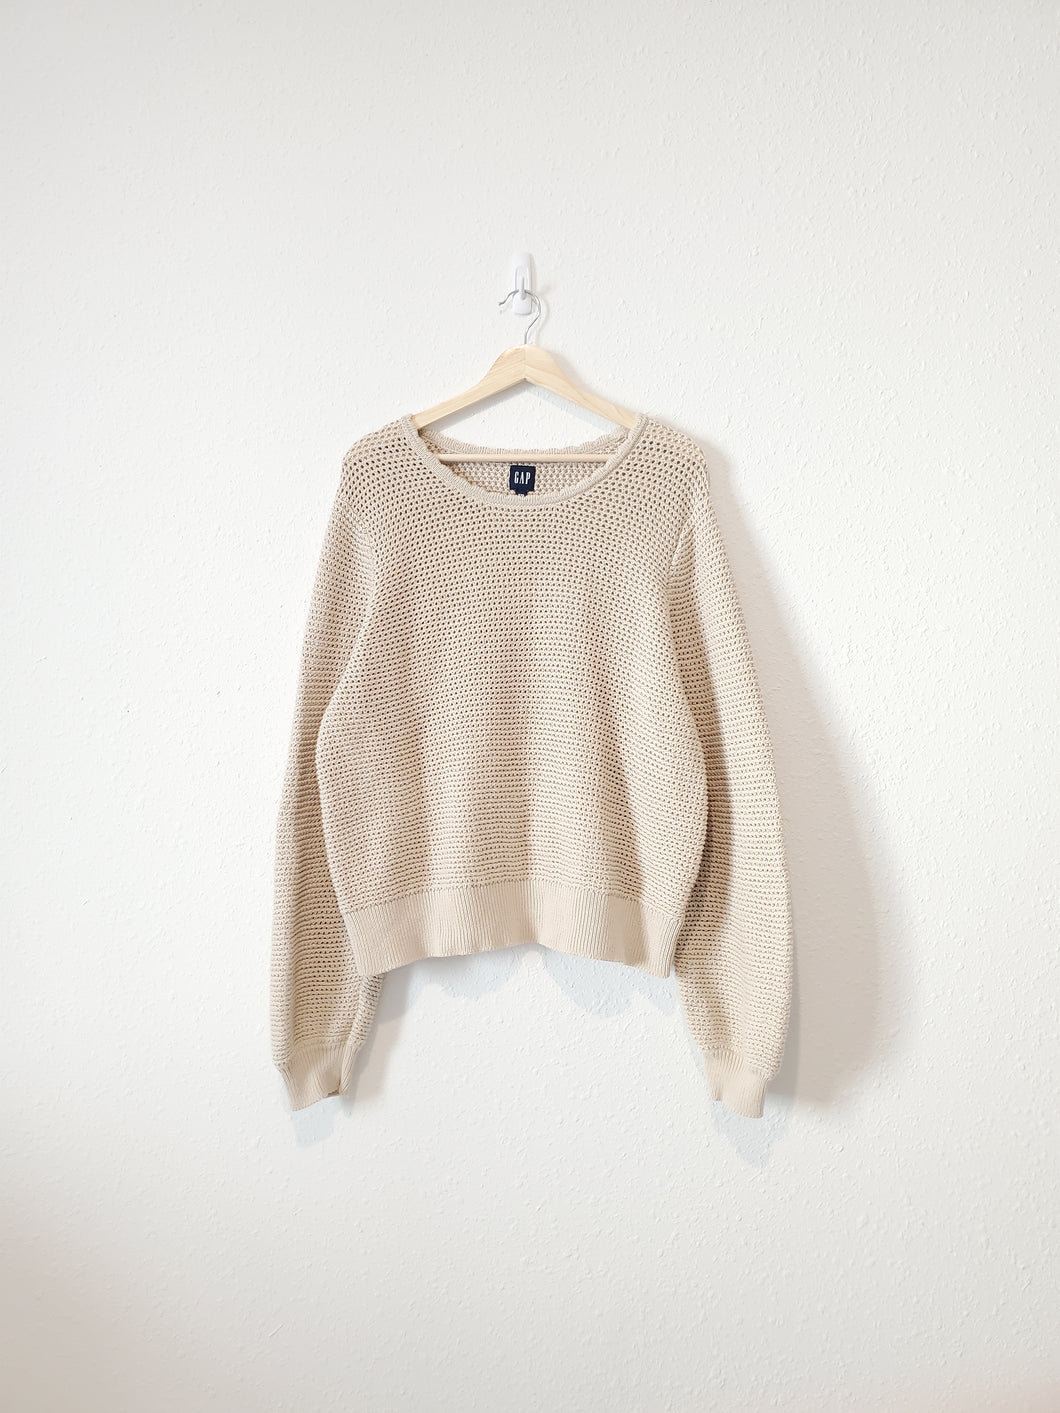 Cotton Crochet Sweater (XXL)